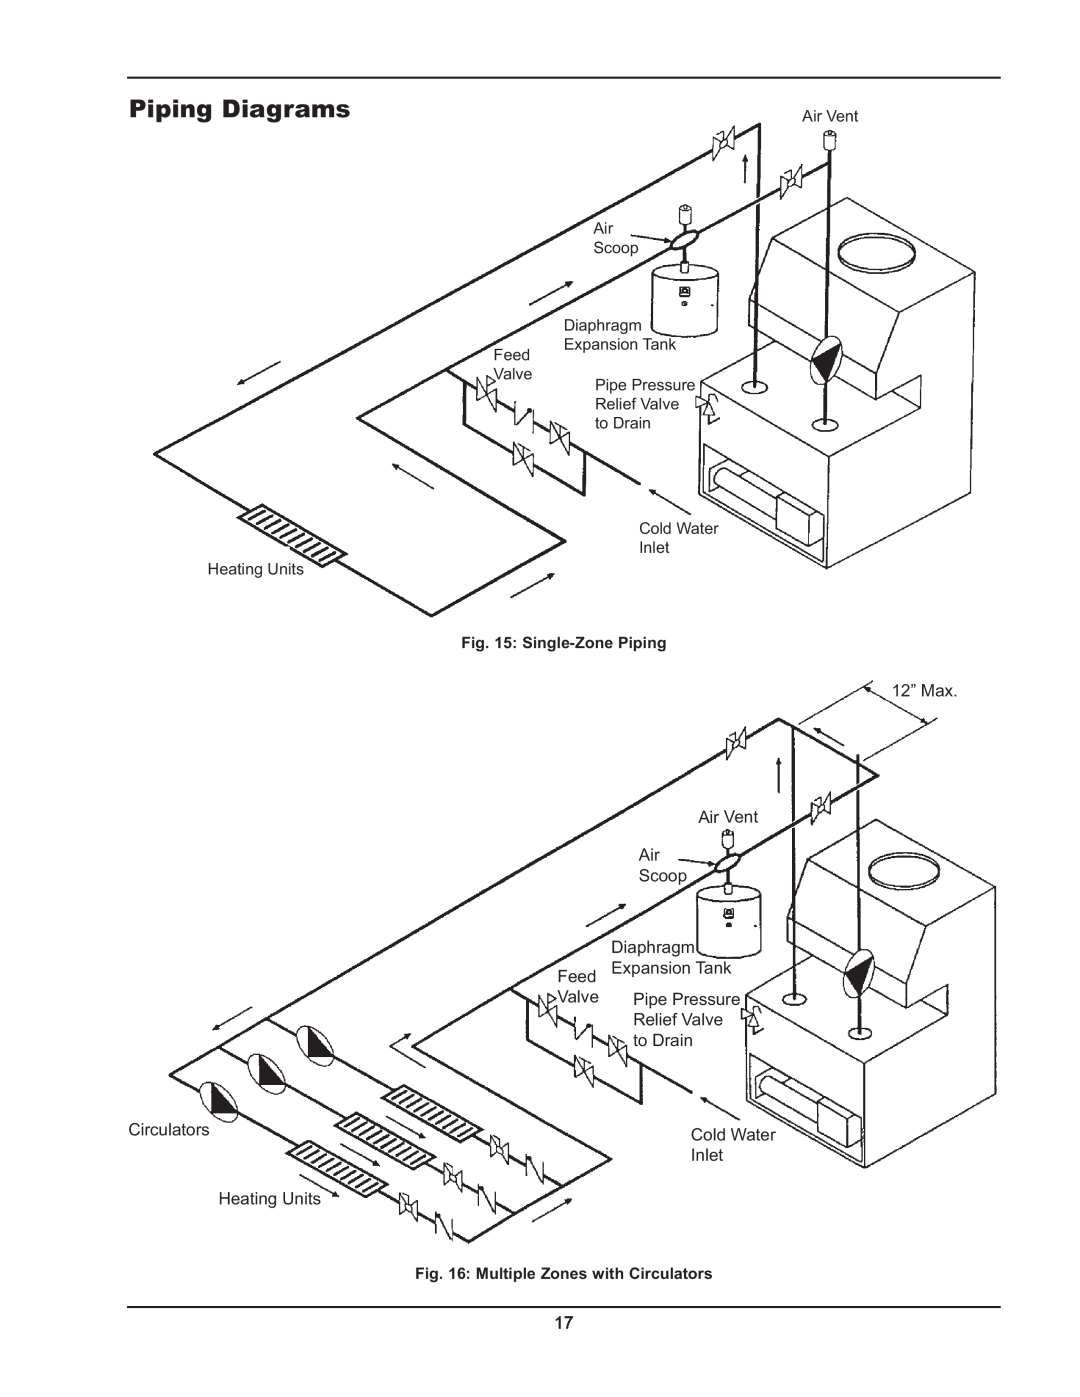 Raypak 0180B Type H Piping Diagrams, 12” Max Air Vent Air Scoop Diaphragm, Feed Expansion Tank, Circulators, Cold Water 